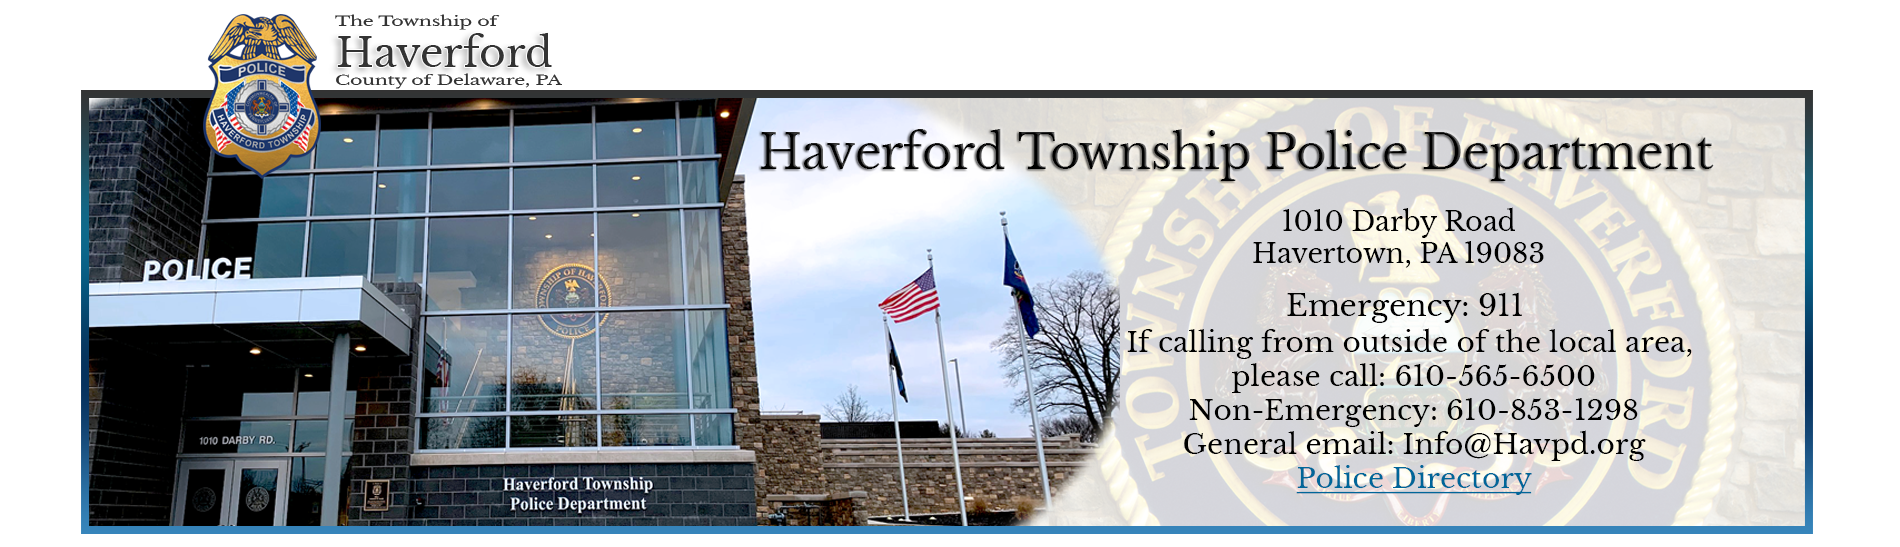 haverford township codes enforcement